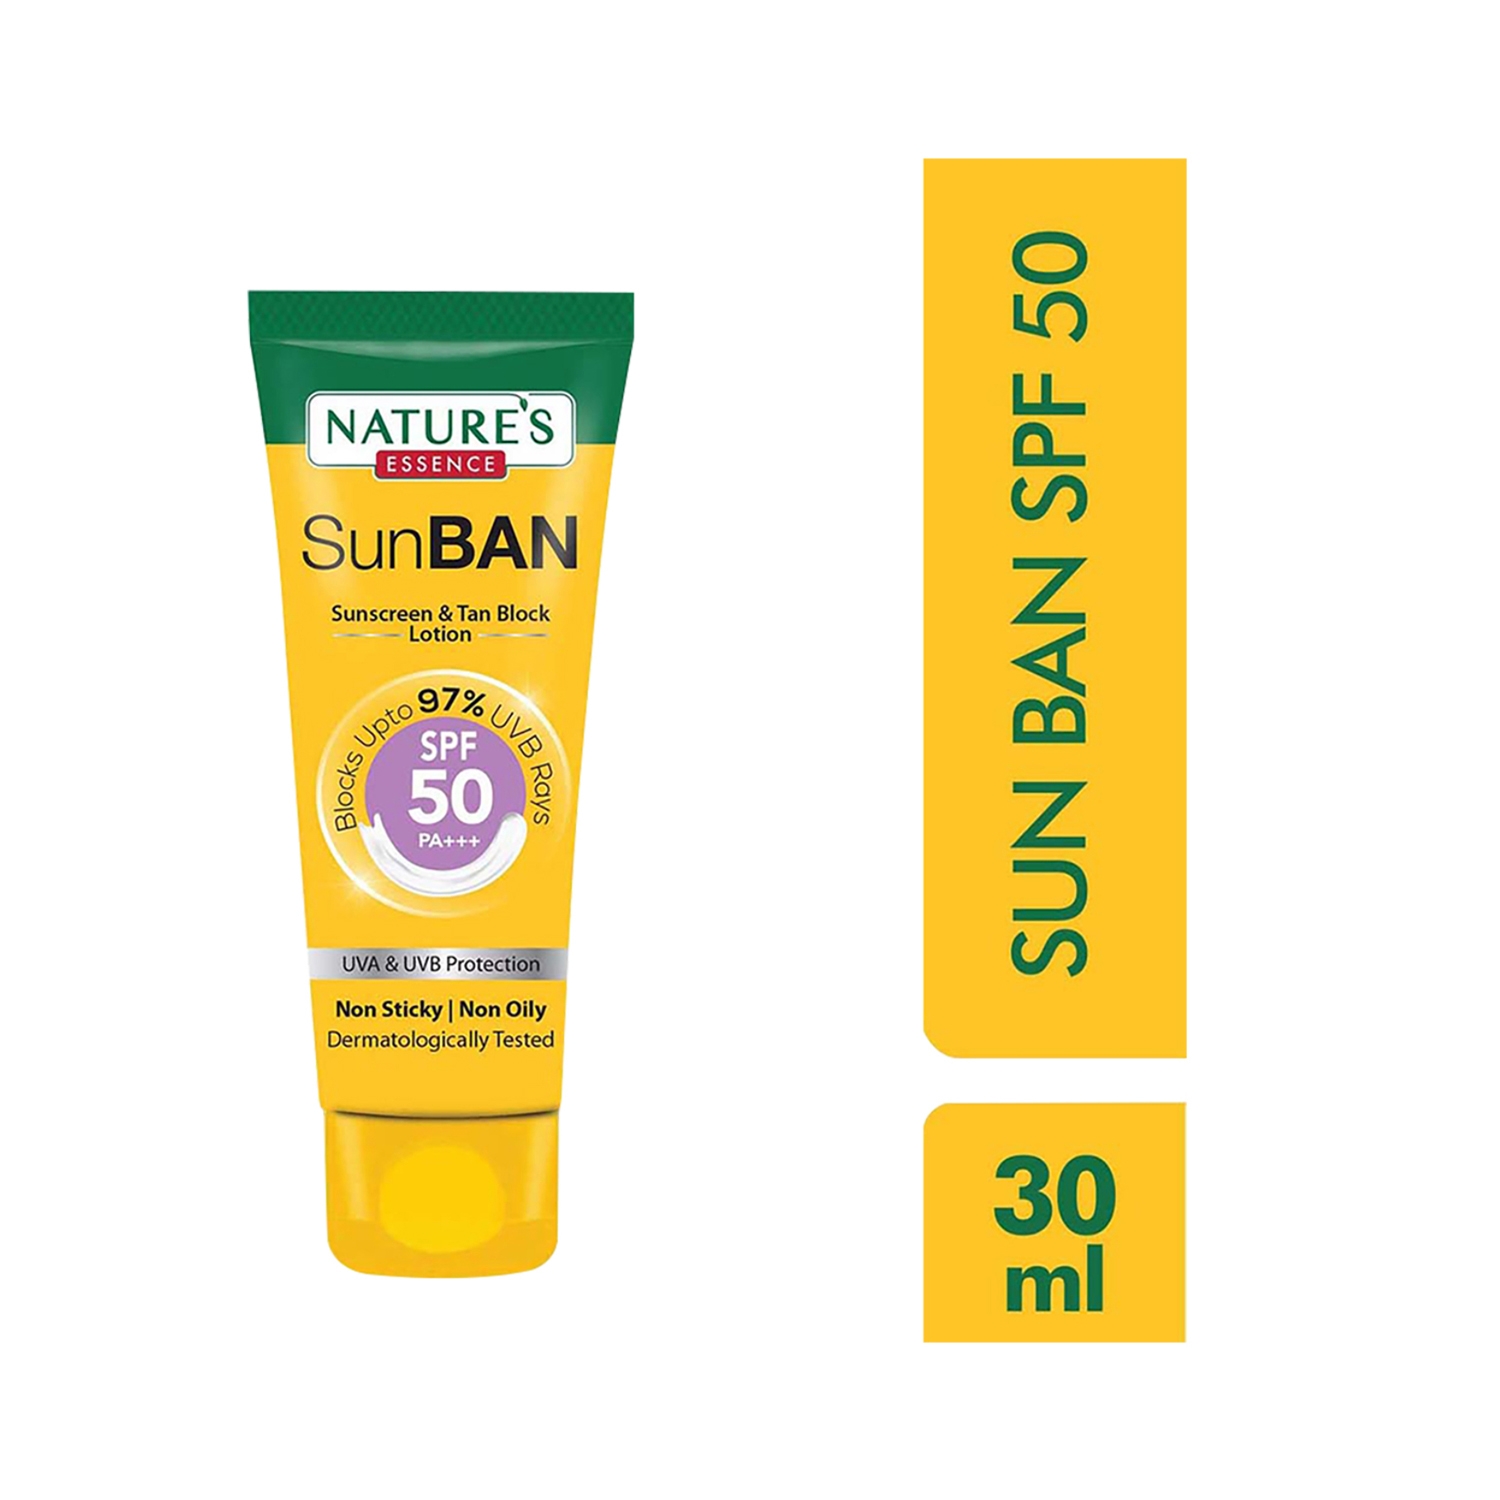 Nature's Essence | Nature's Essence Sunban SPF 50 Pa+++ Sunscreen & Tan Block Lotion (30ml)